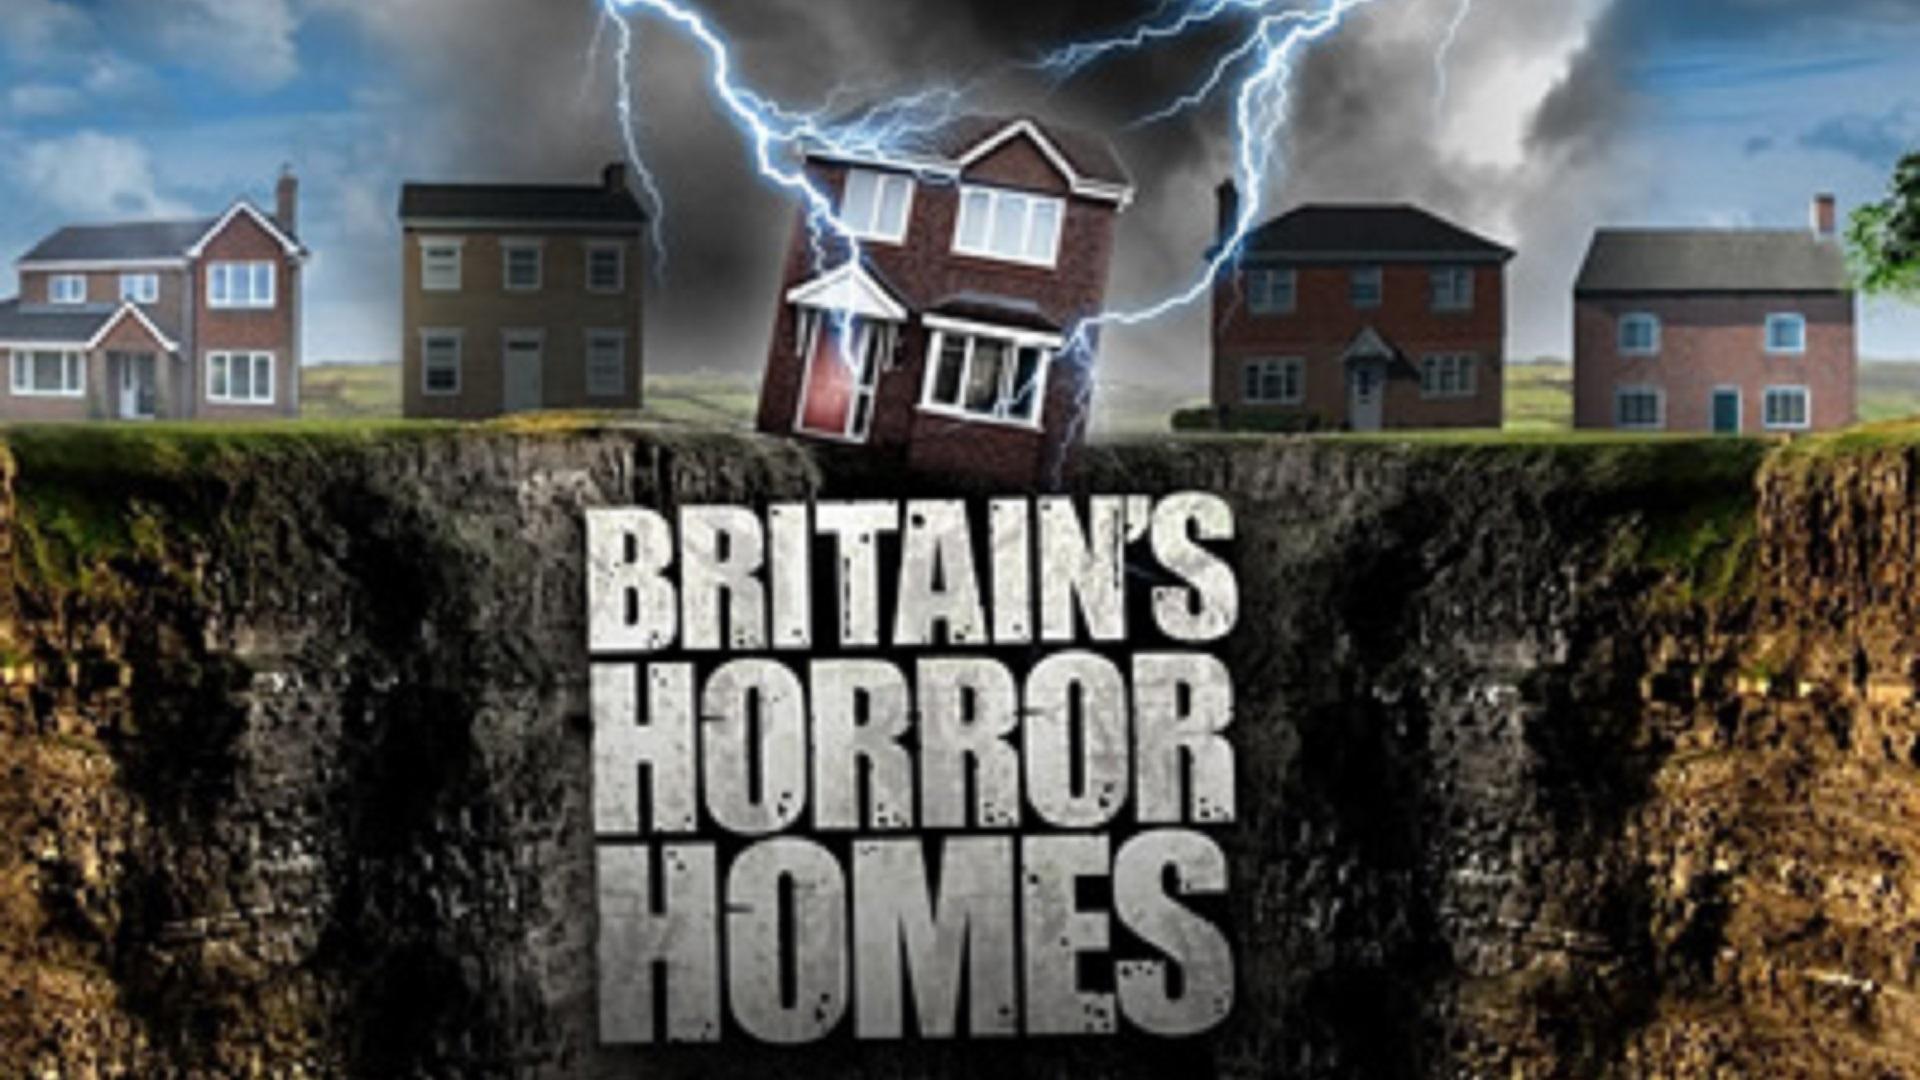 Britain's Horror Homes